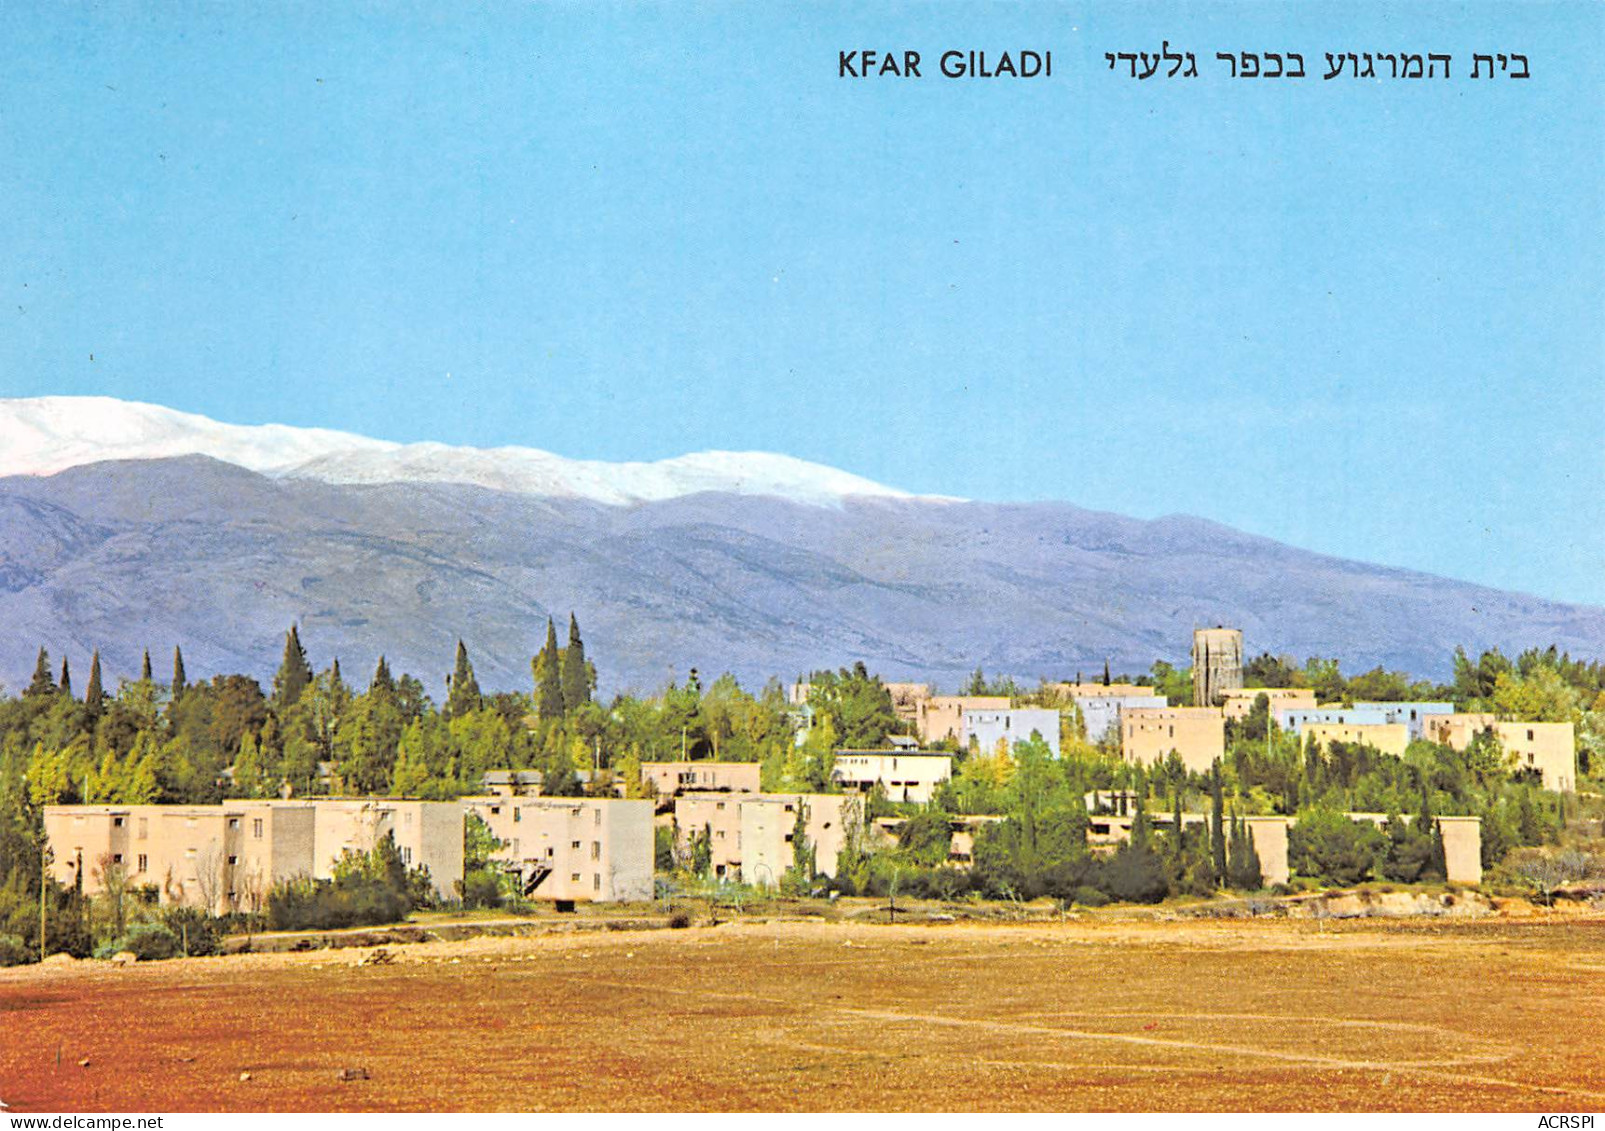  Israël ISRAEL  Rest House Kfar Giladi Galilee  N°27 \ MK3030    כפר גלעדי. ישר�?ל - Israël